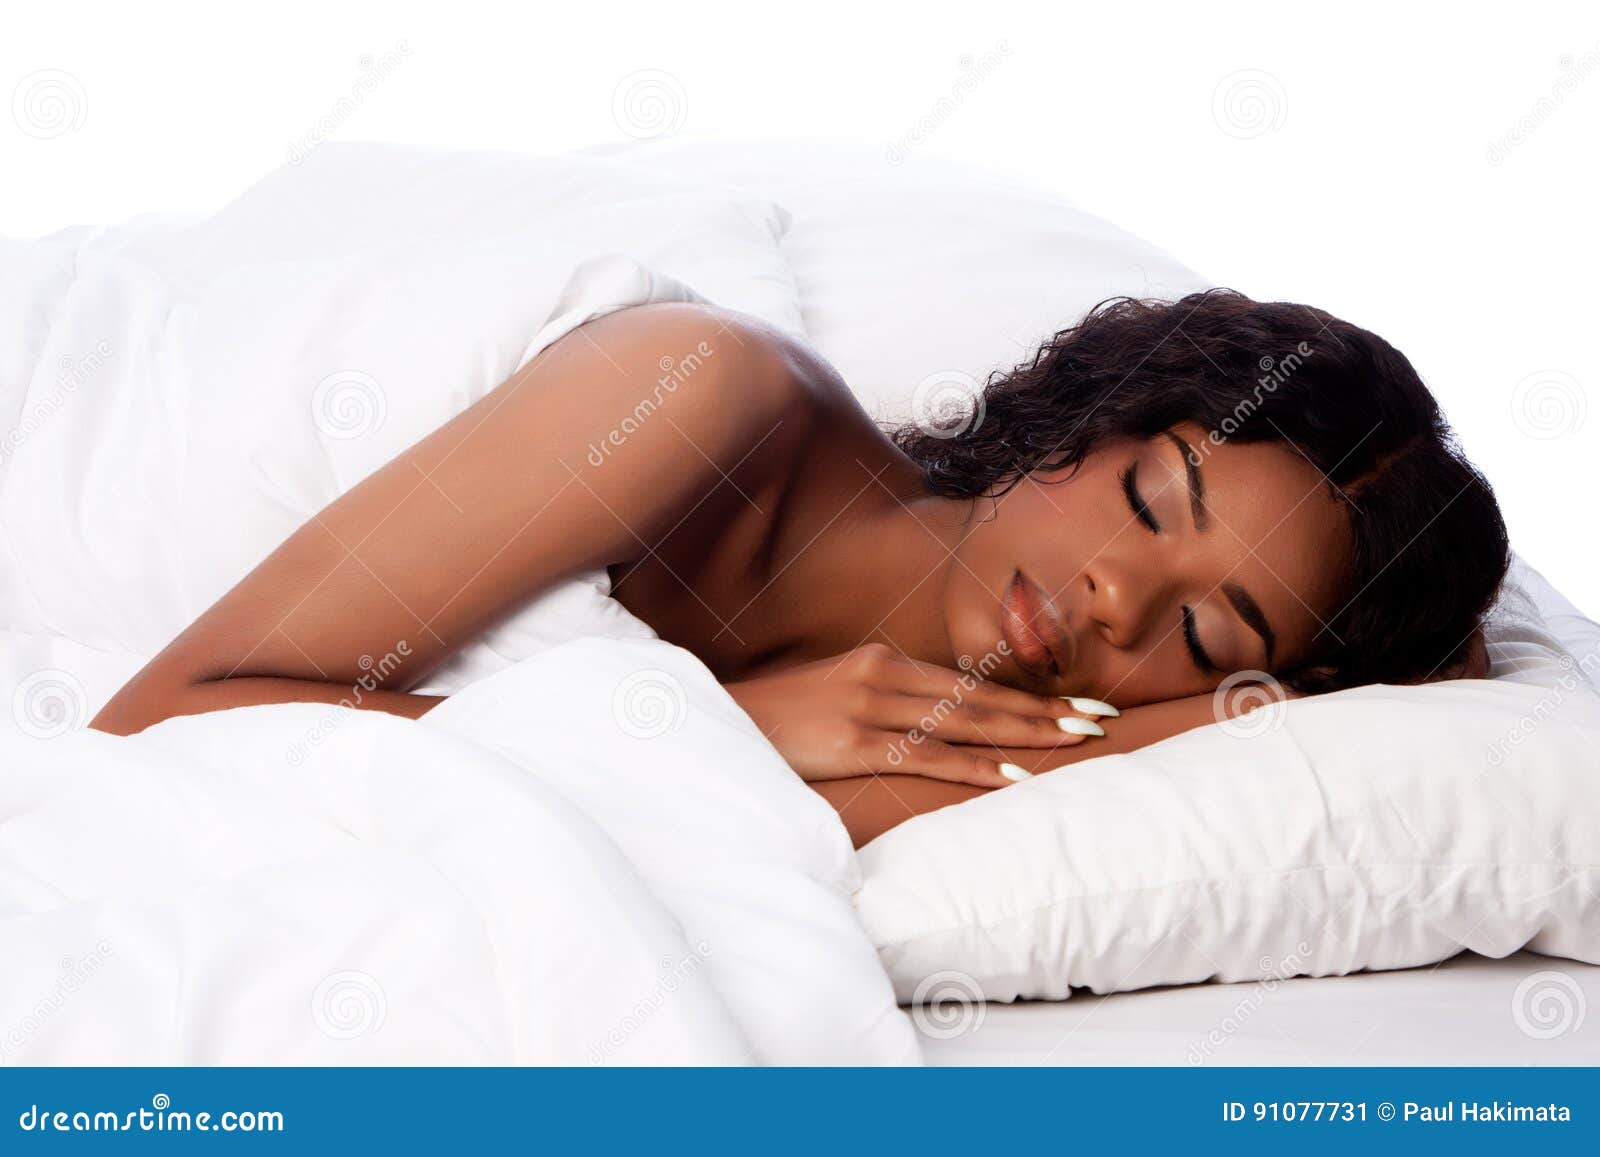 beautiful woman deeply asleep and dreaming